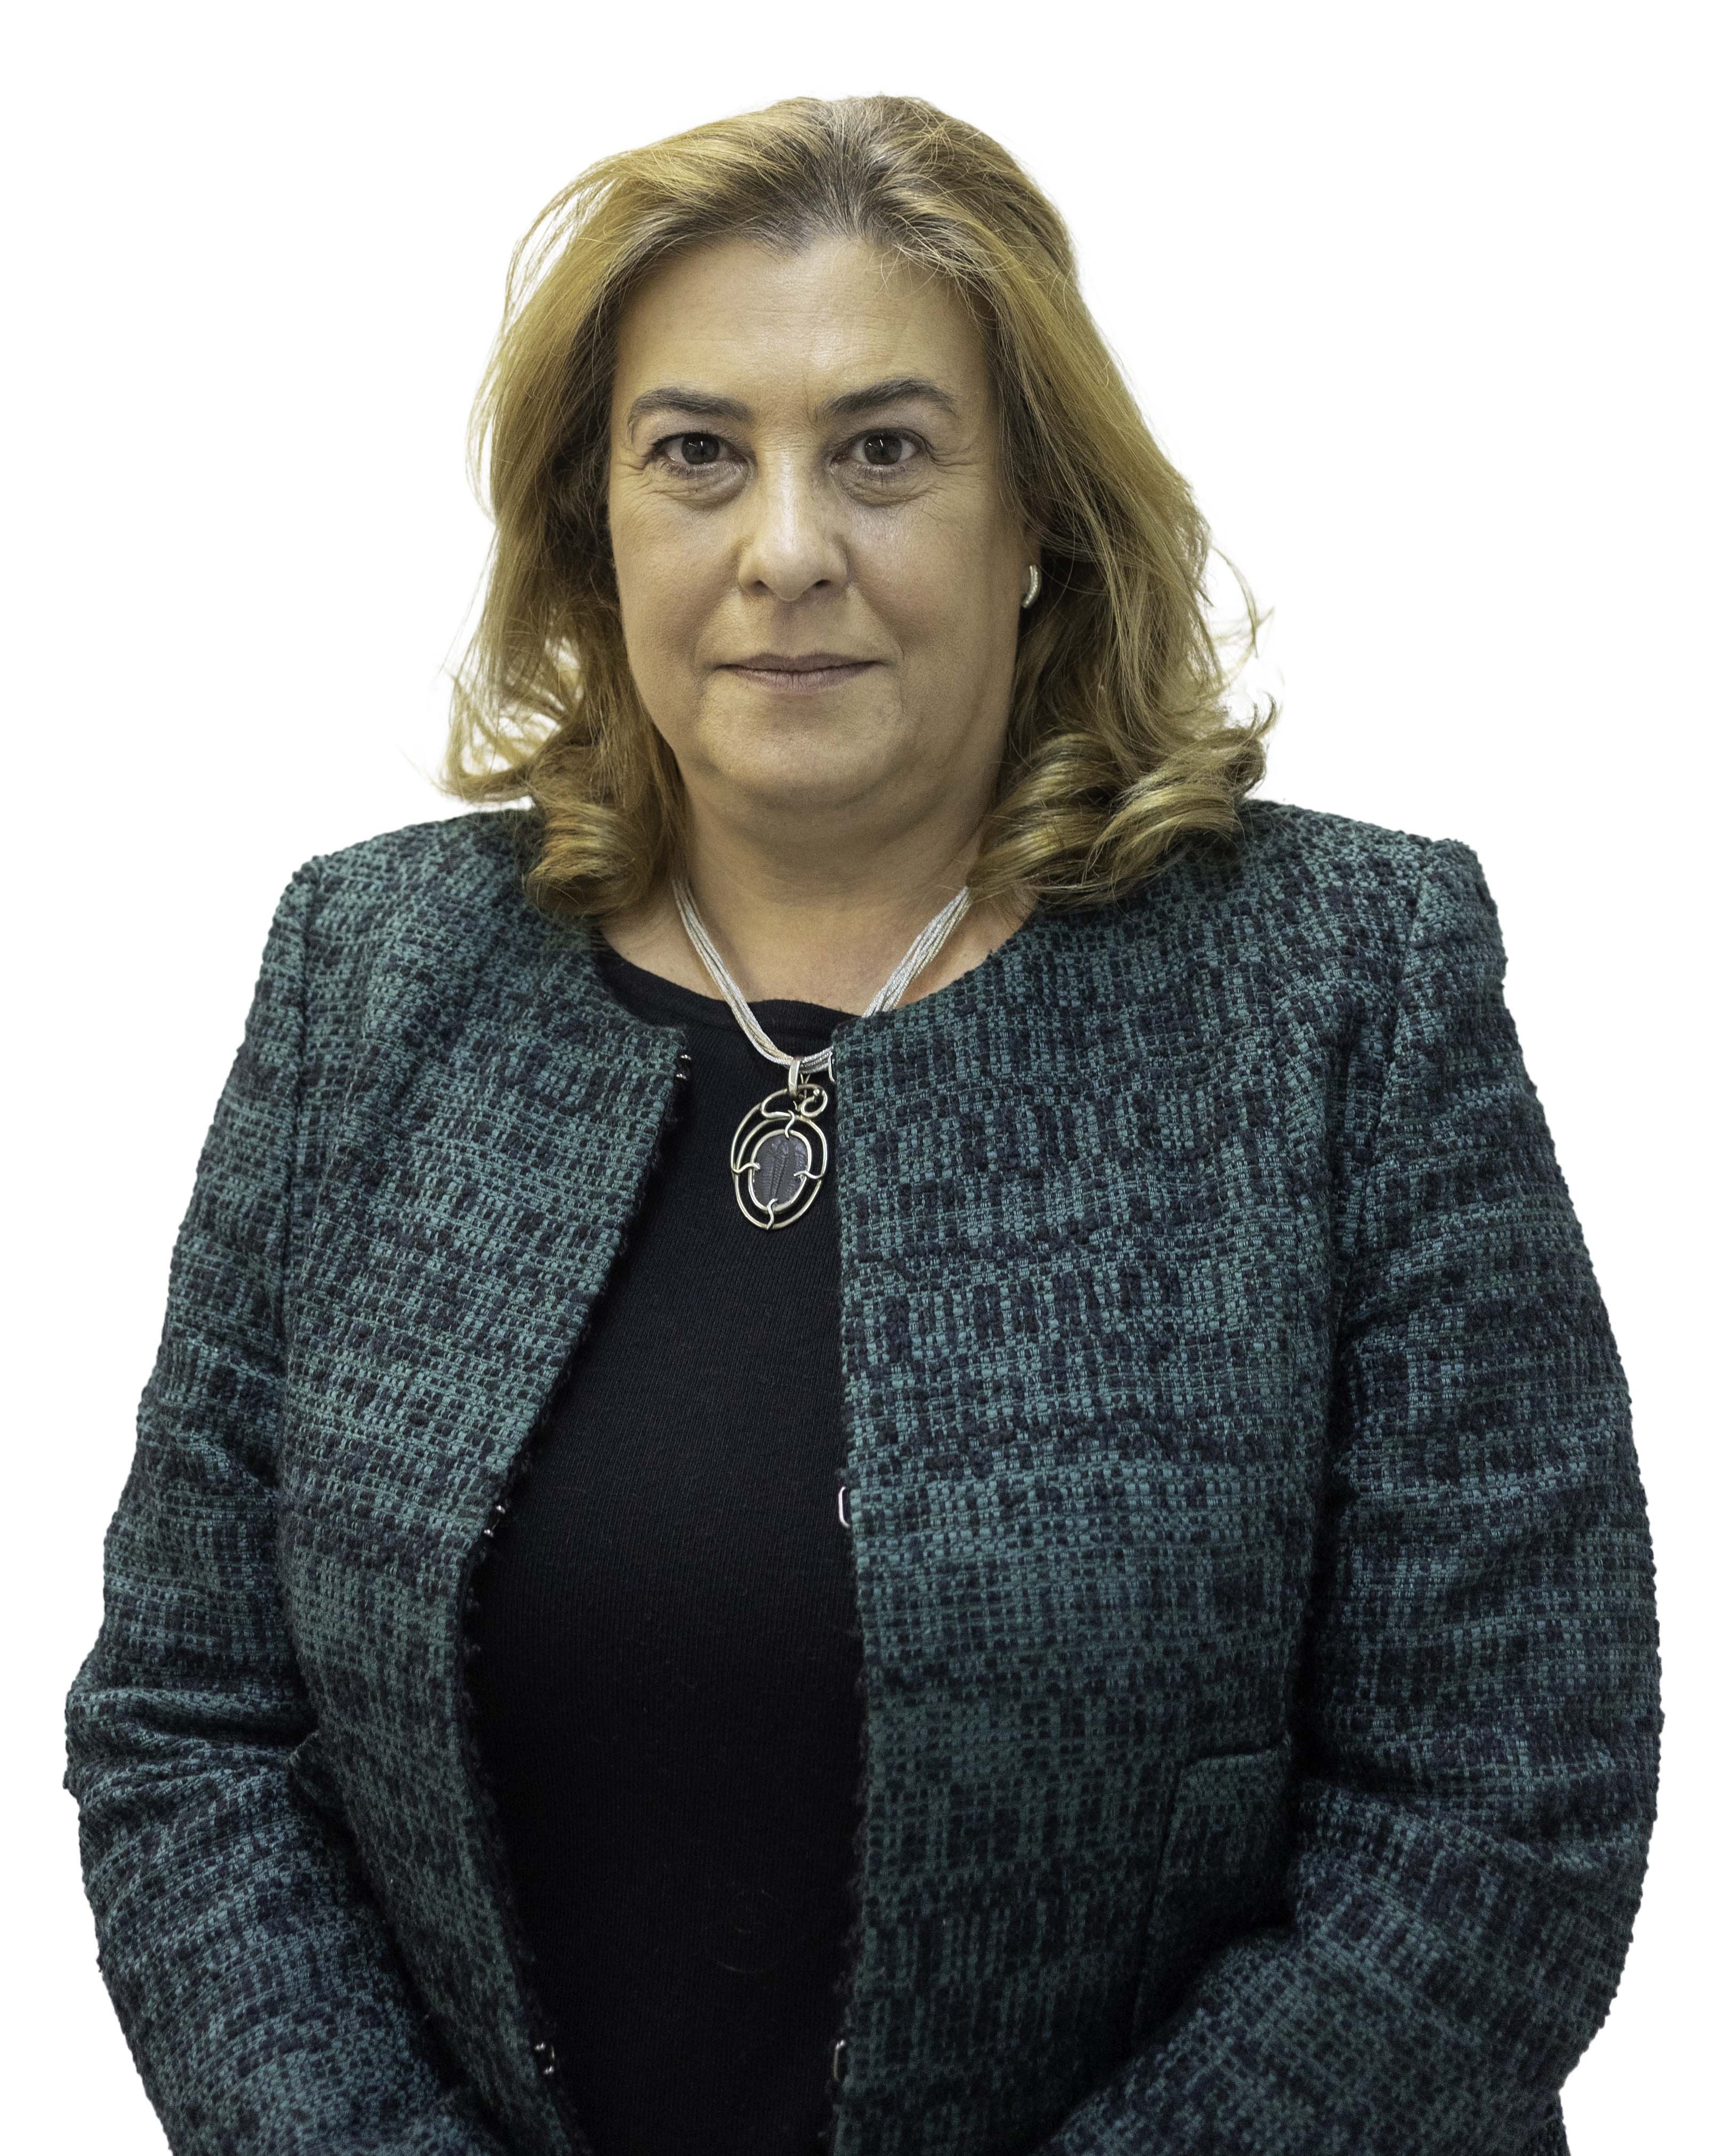 María Begoña Villanueva Montes